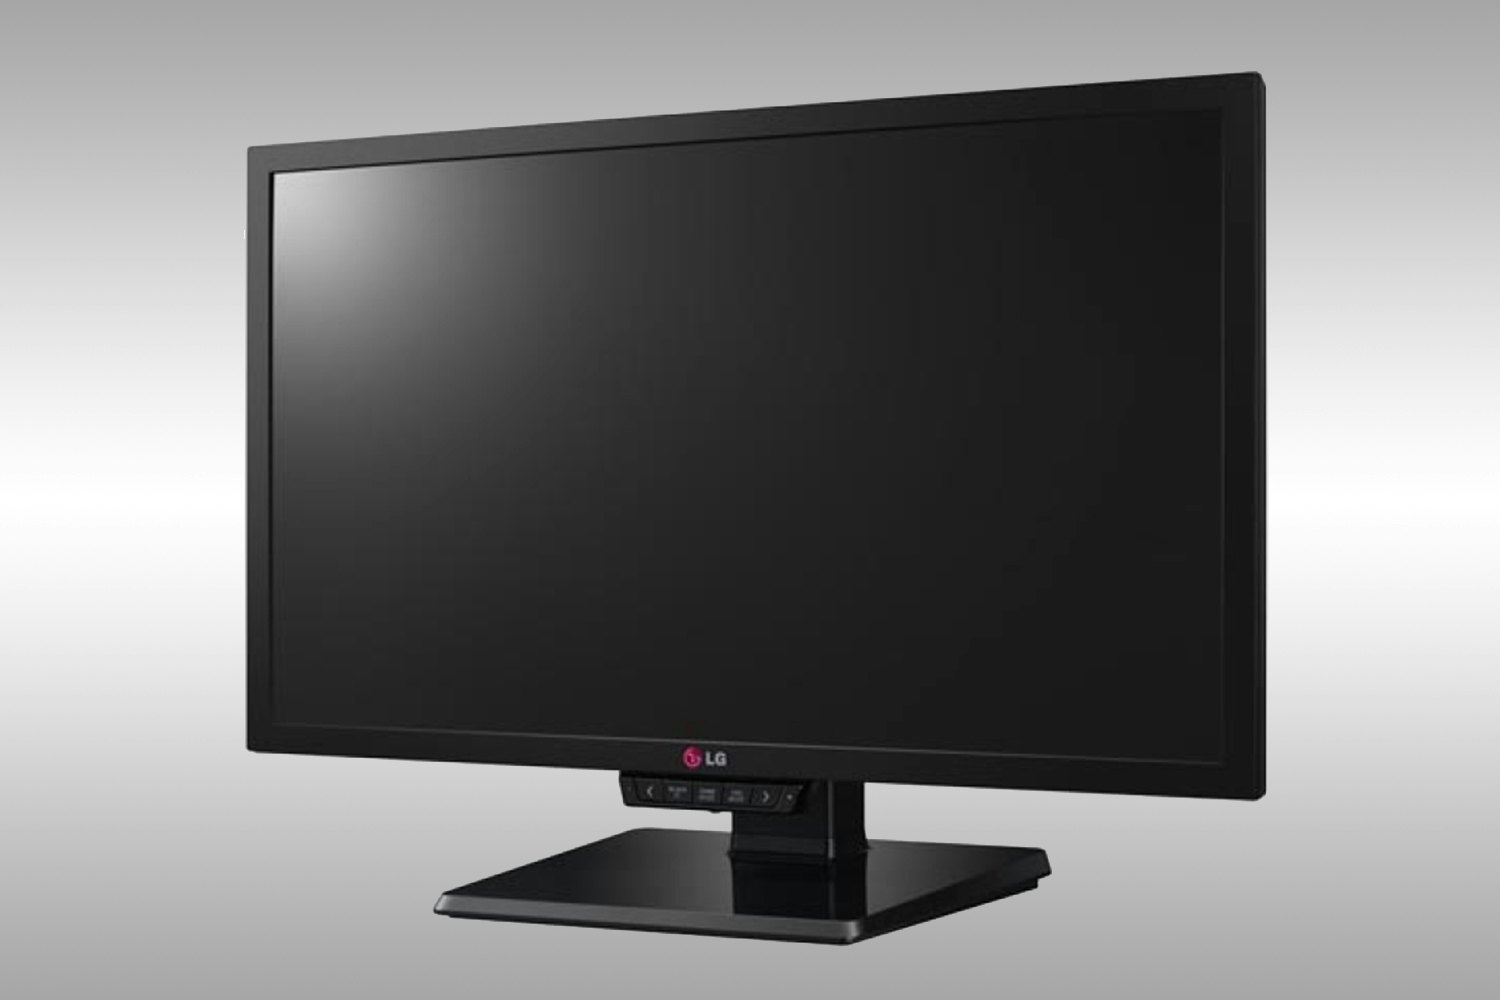 LG 24" 144hz Full HD LED Gaming Monitor